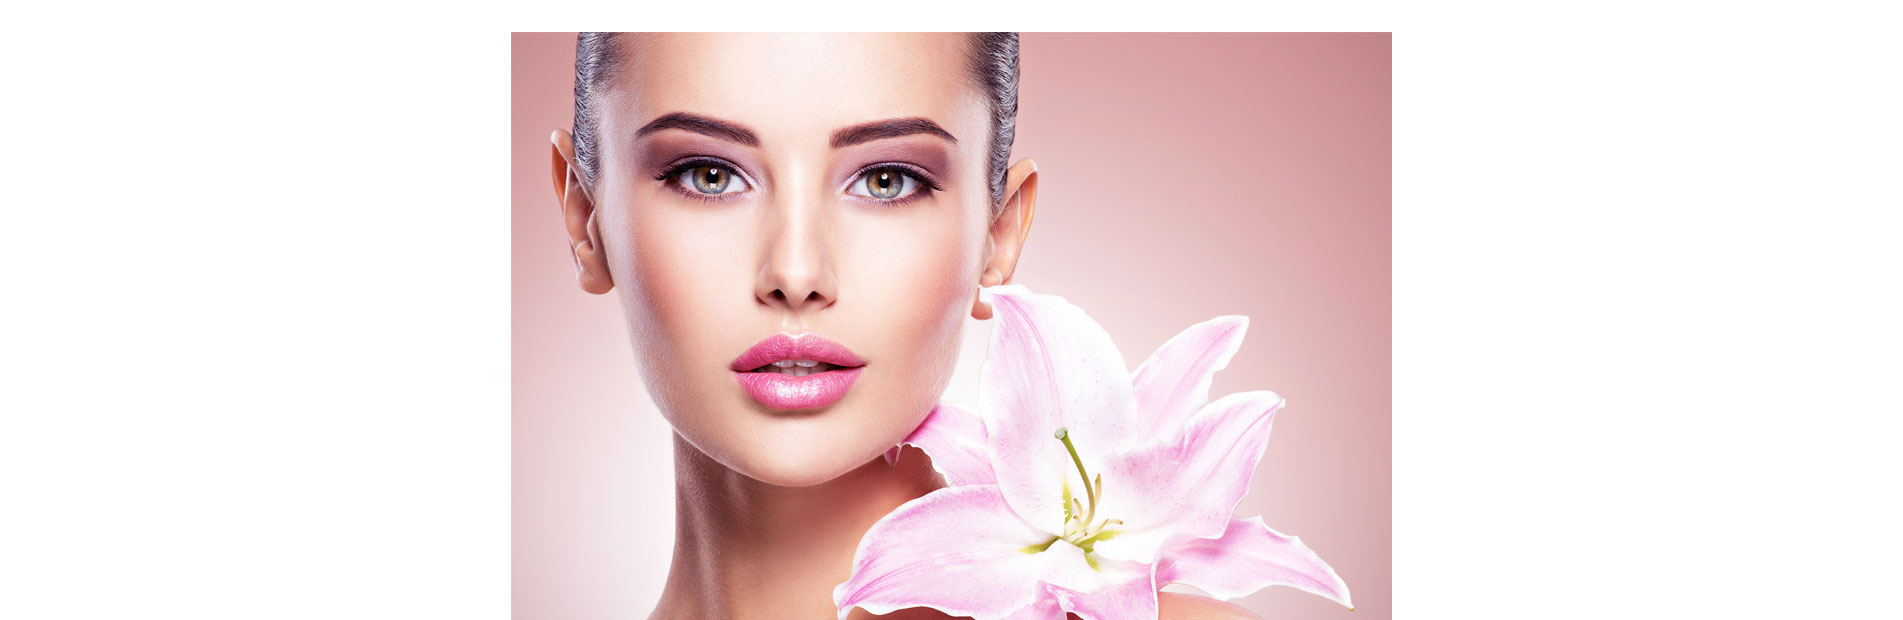 Pure Elegance MedSpa   Skin Care | Dermaplaning, Microneedling and Facial Fillers